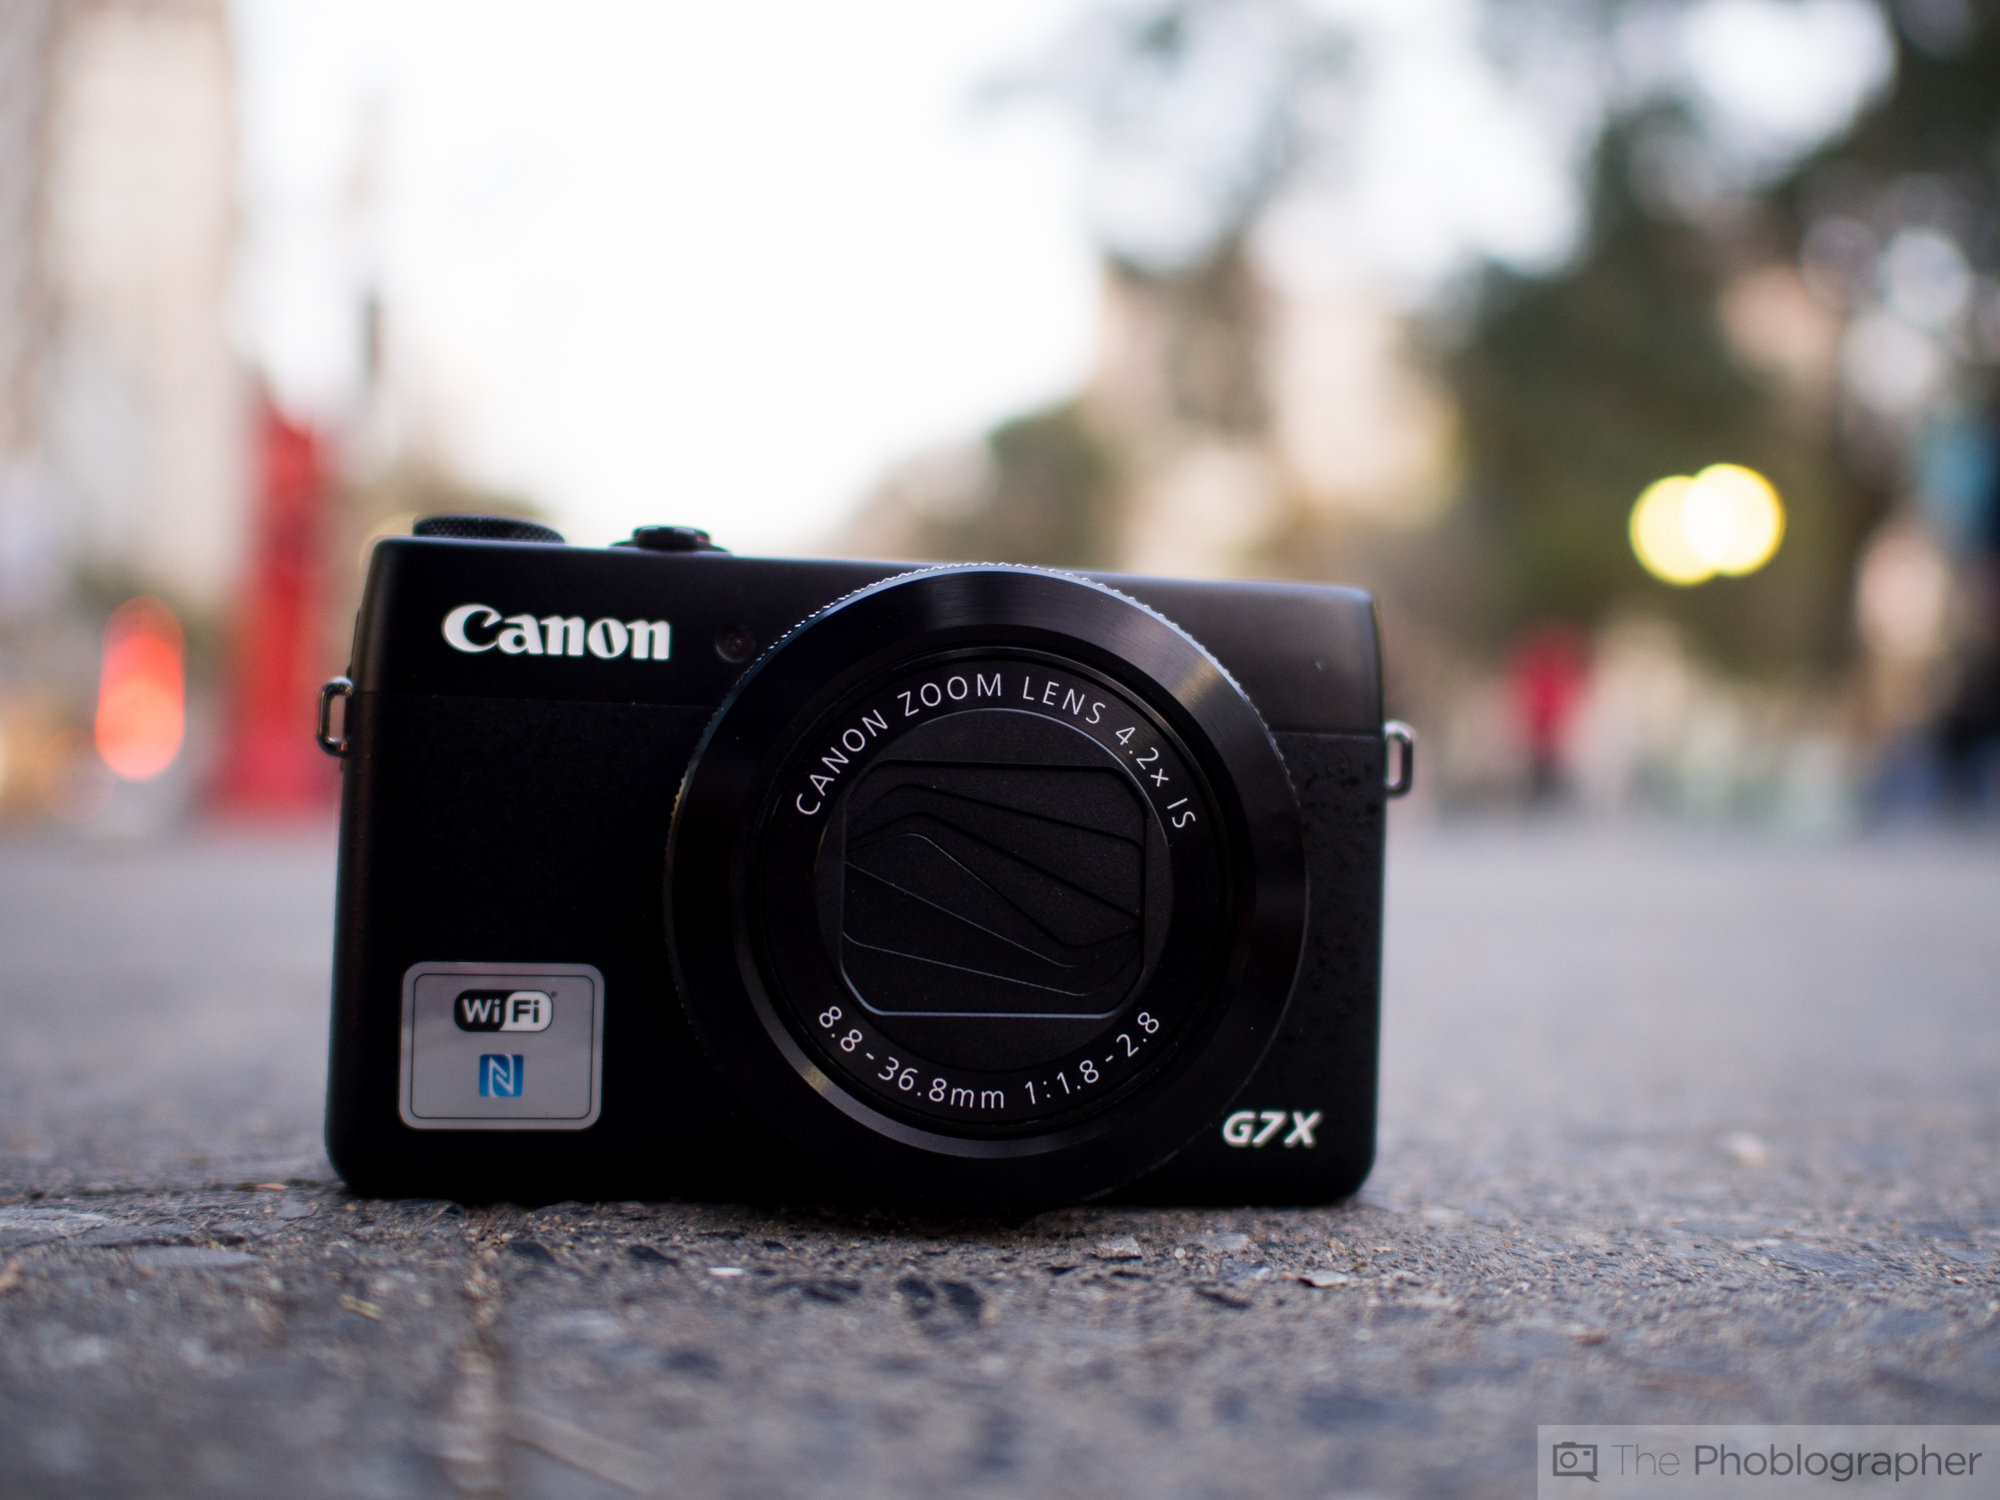 Canon PowerShot G7 X review